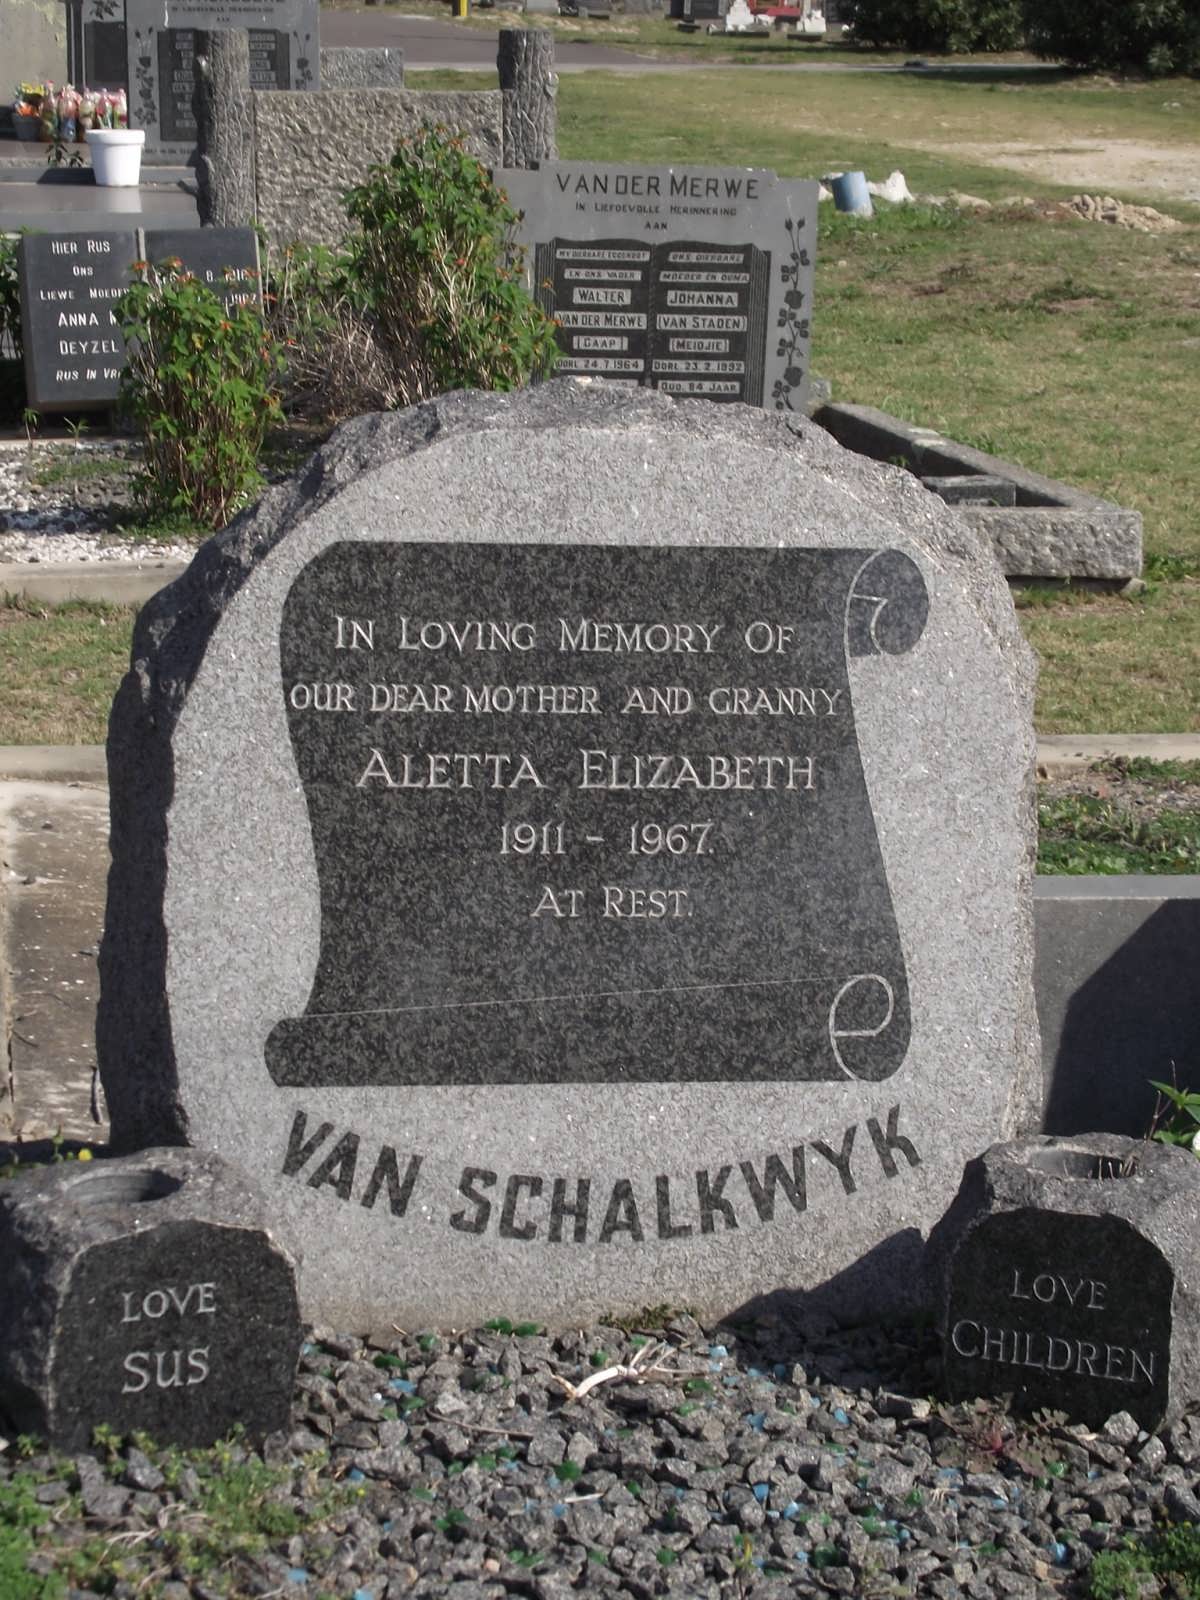 SCHALKWYK Aletta Elizabeth, van 1911-1967